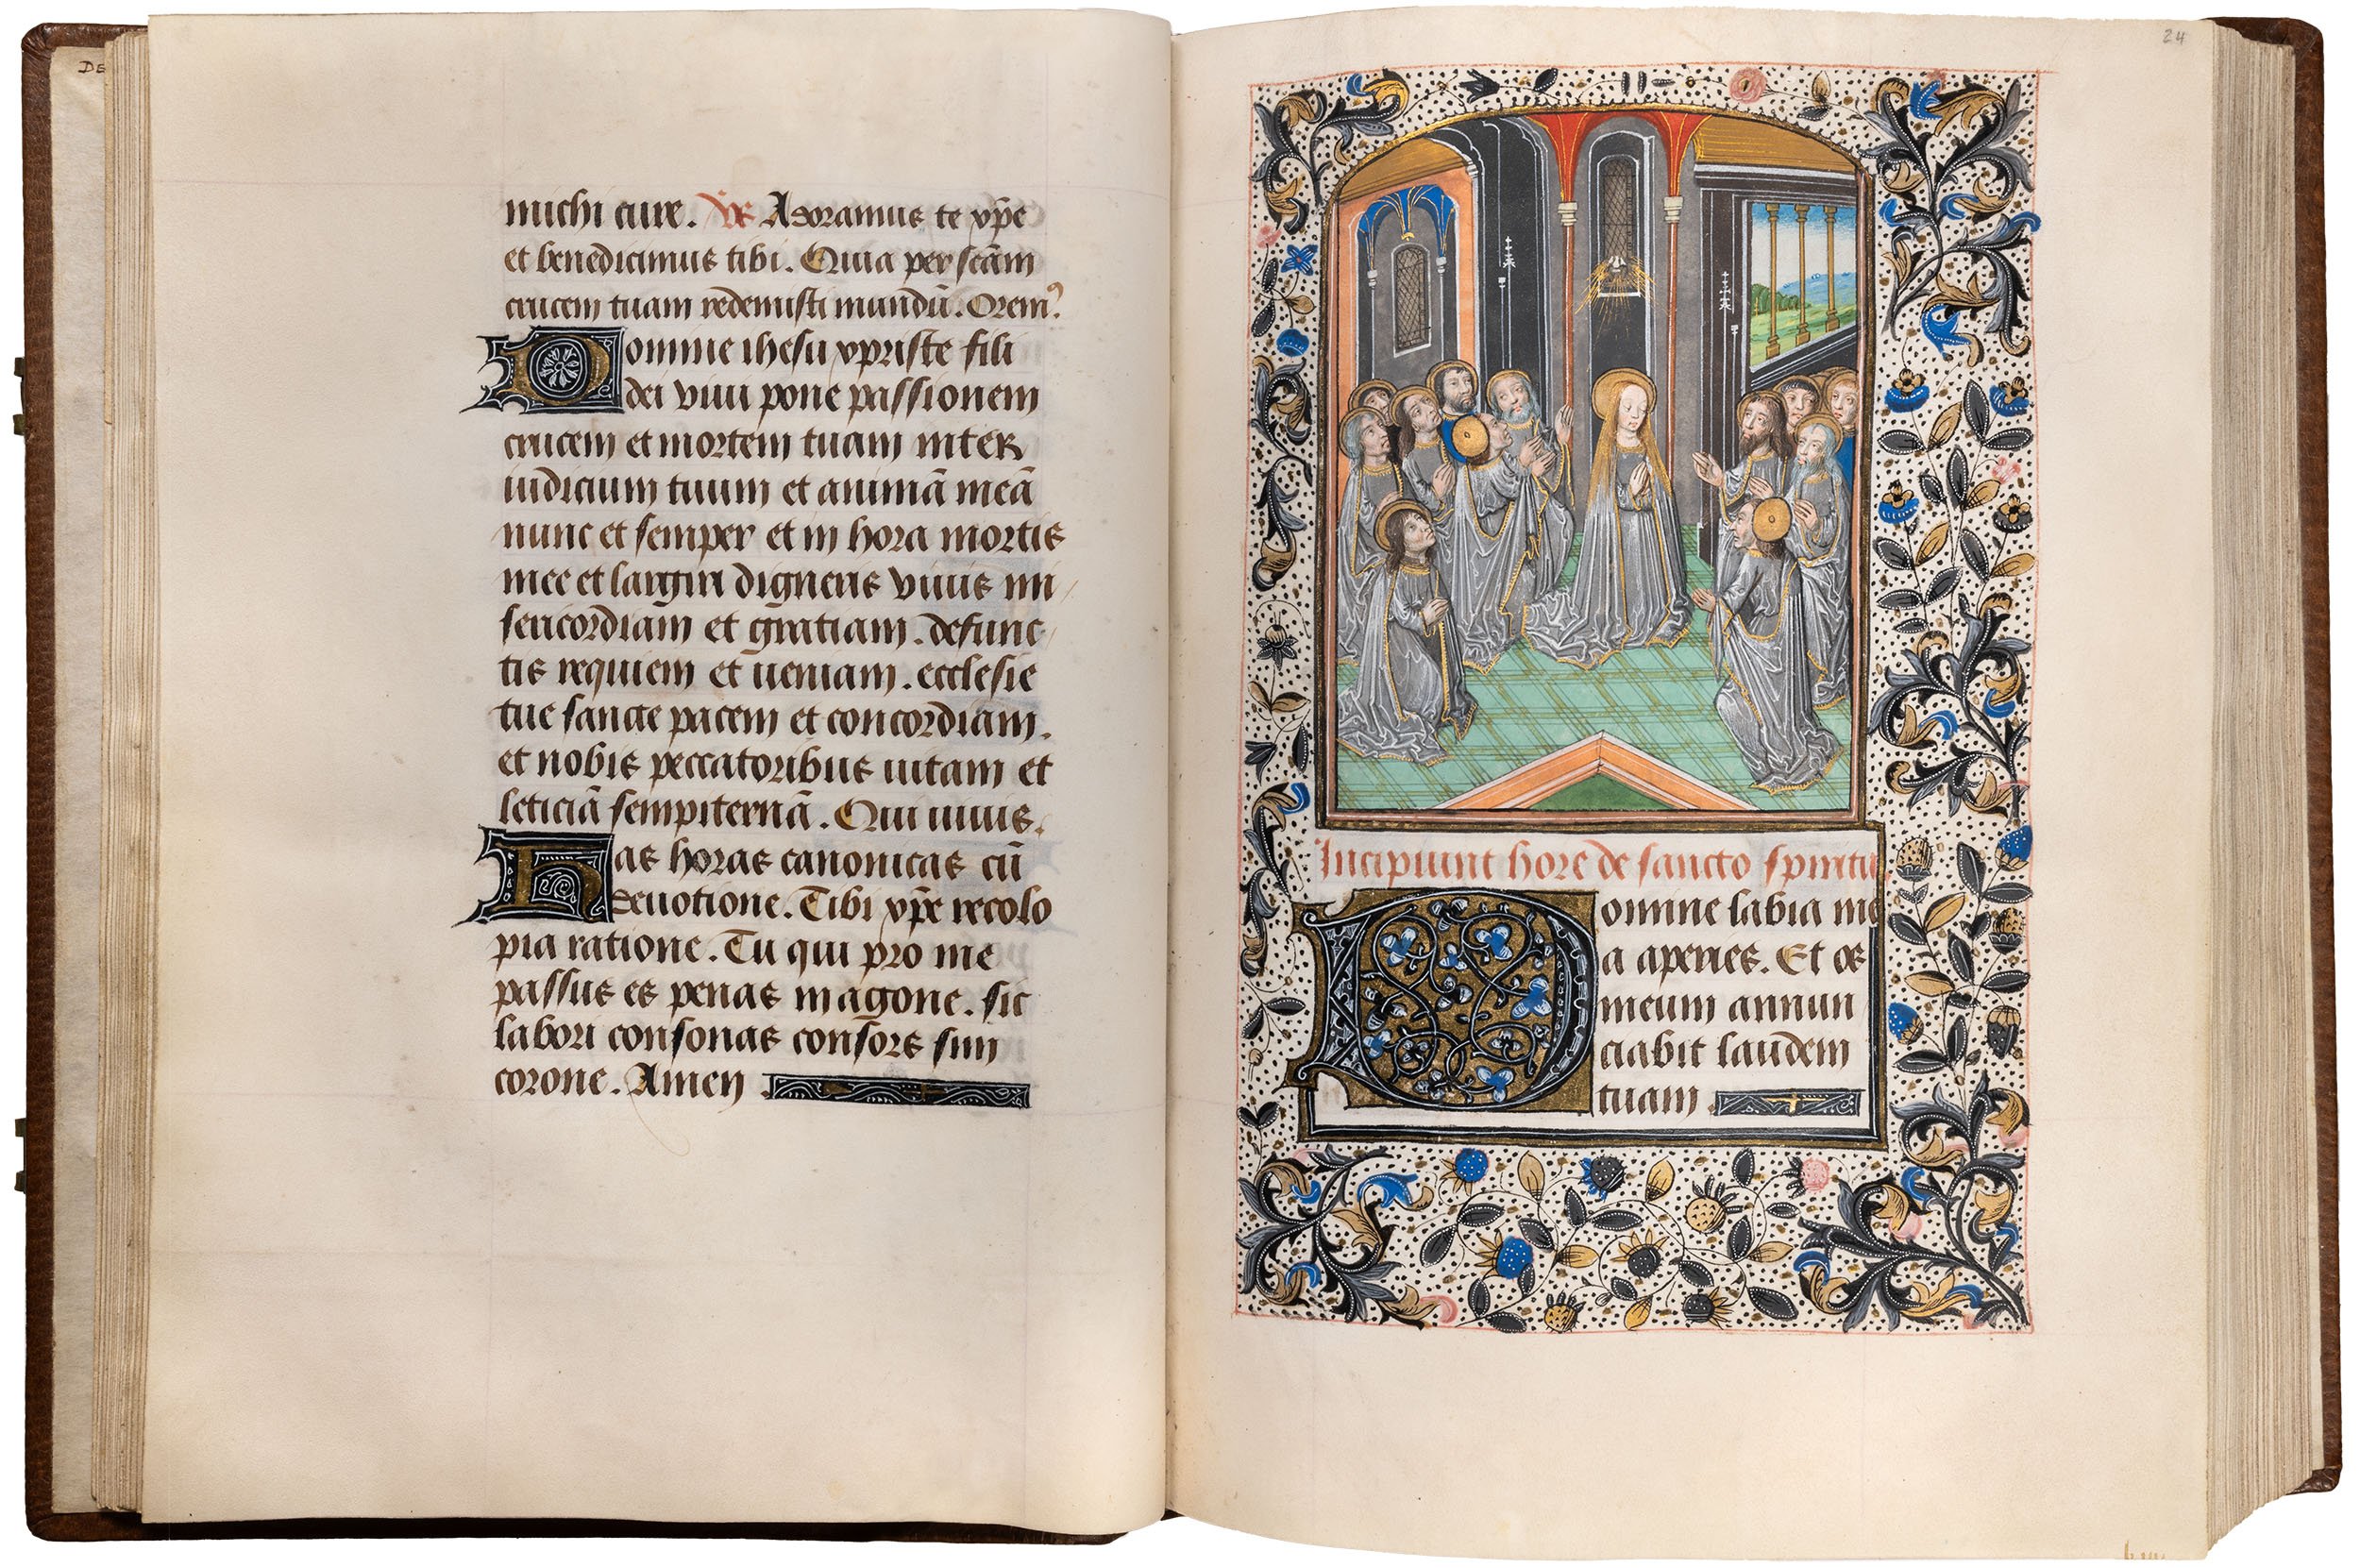 Book-of-hours-claude-toulongeon-grisaille-order-golden-fleece-bruges-edward-iv-folio-19.jpg